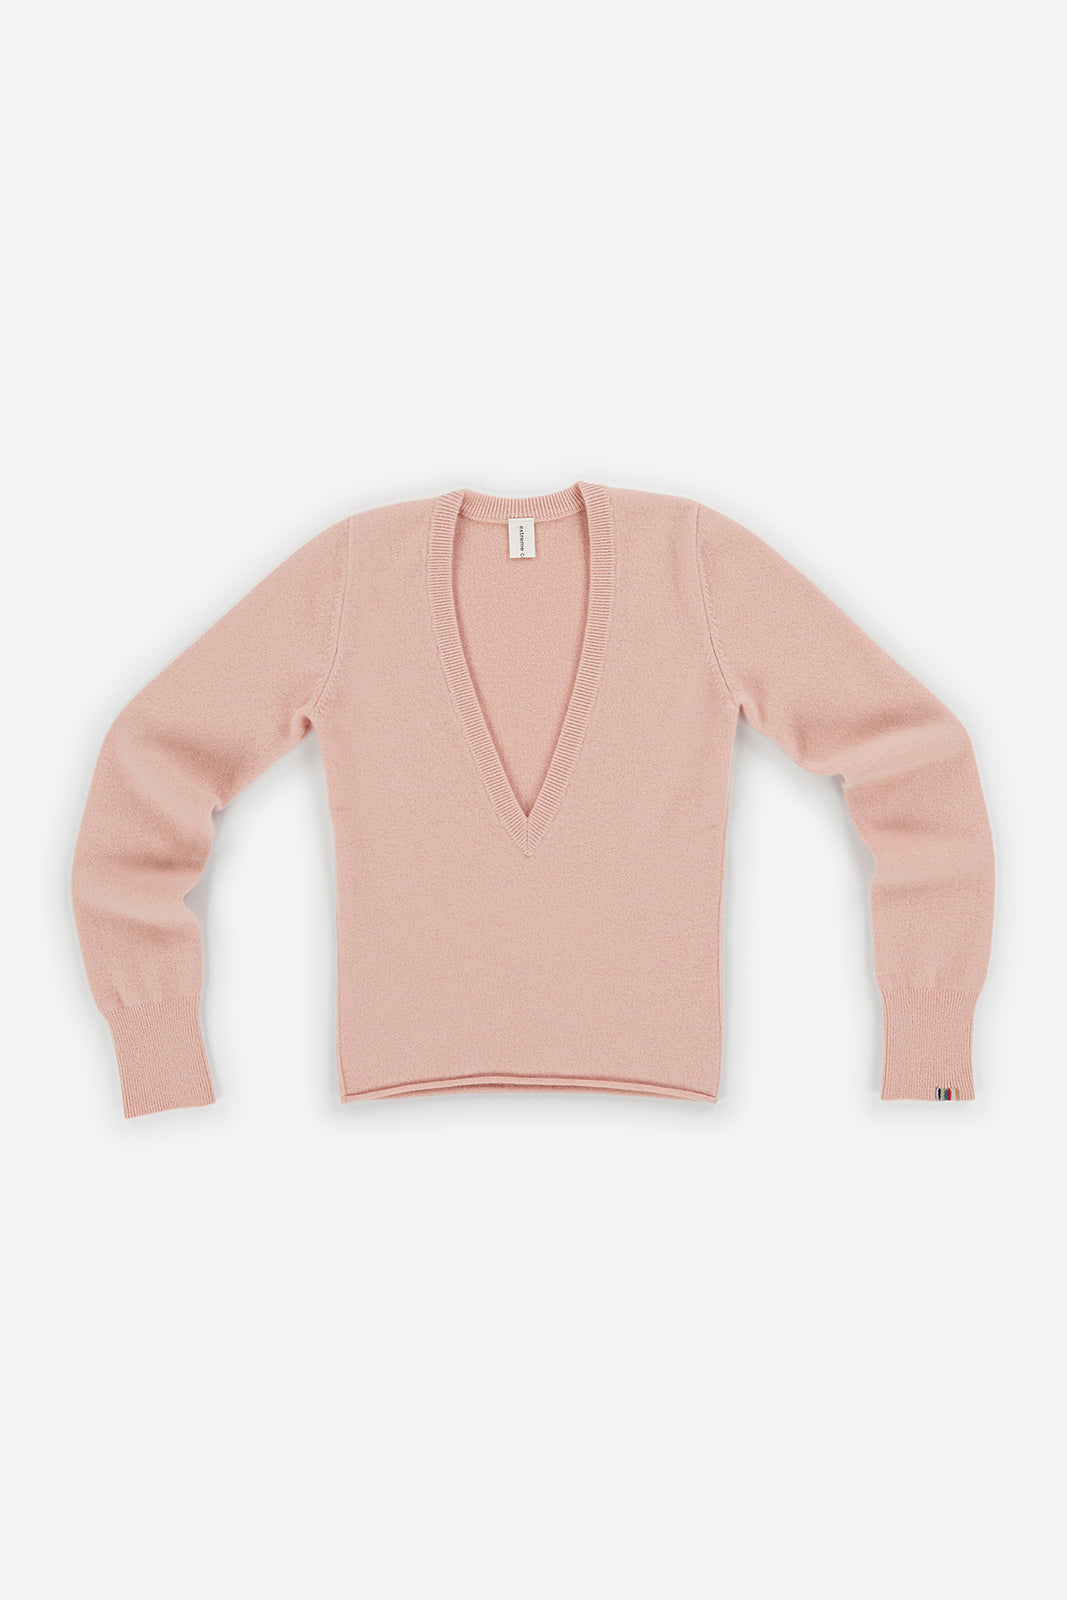 No 286 Deco Sweater